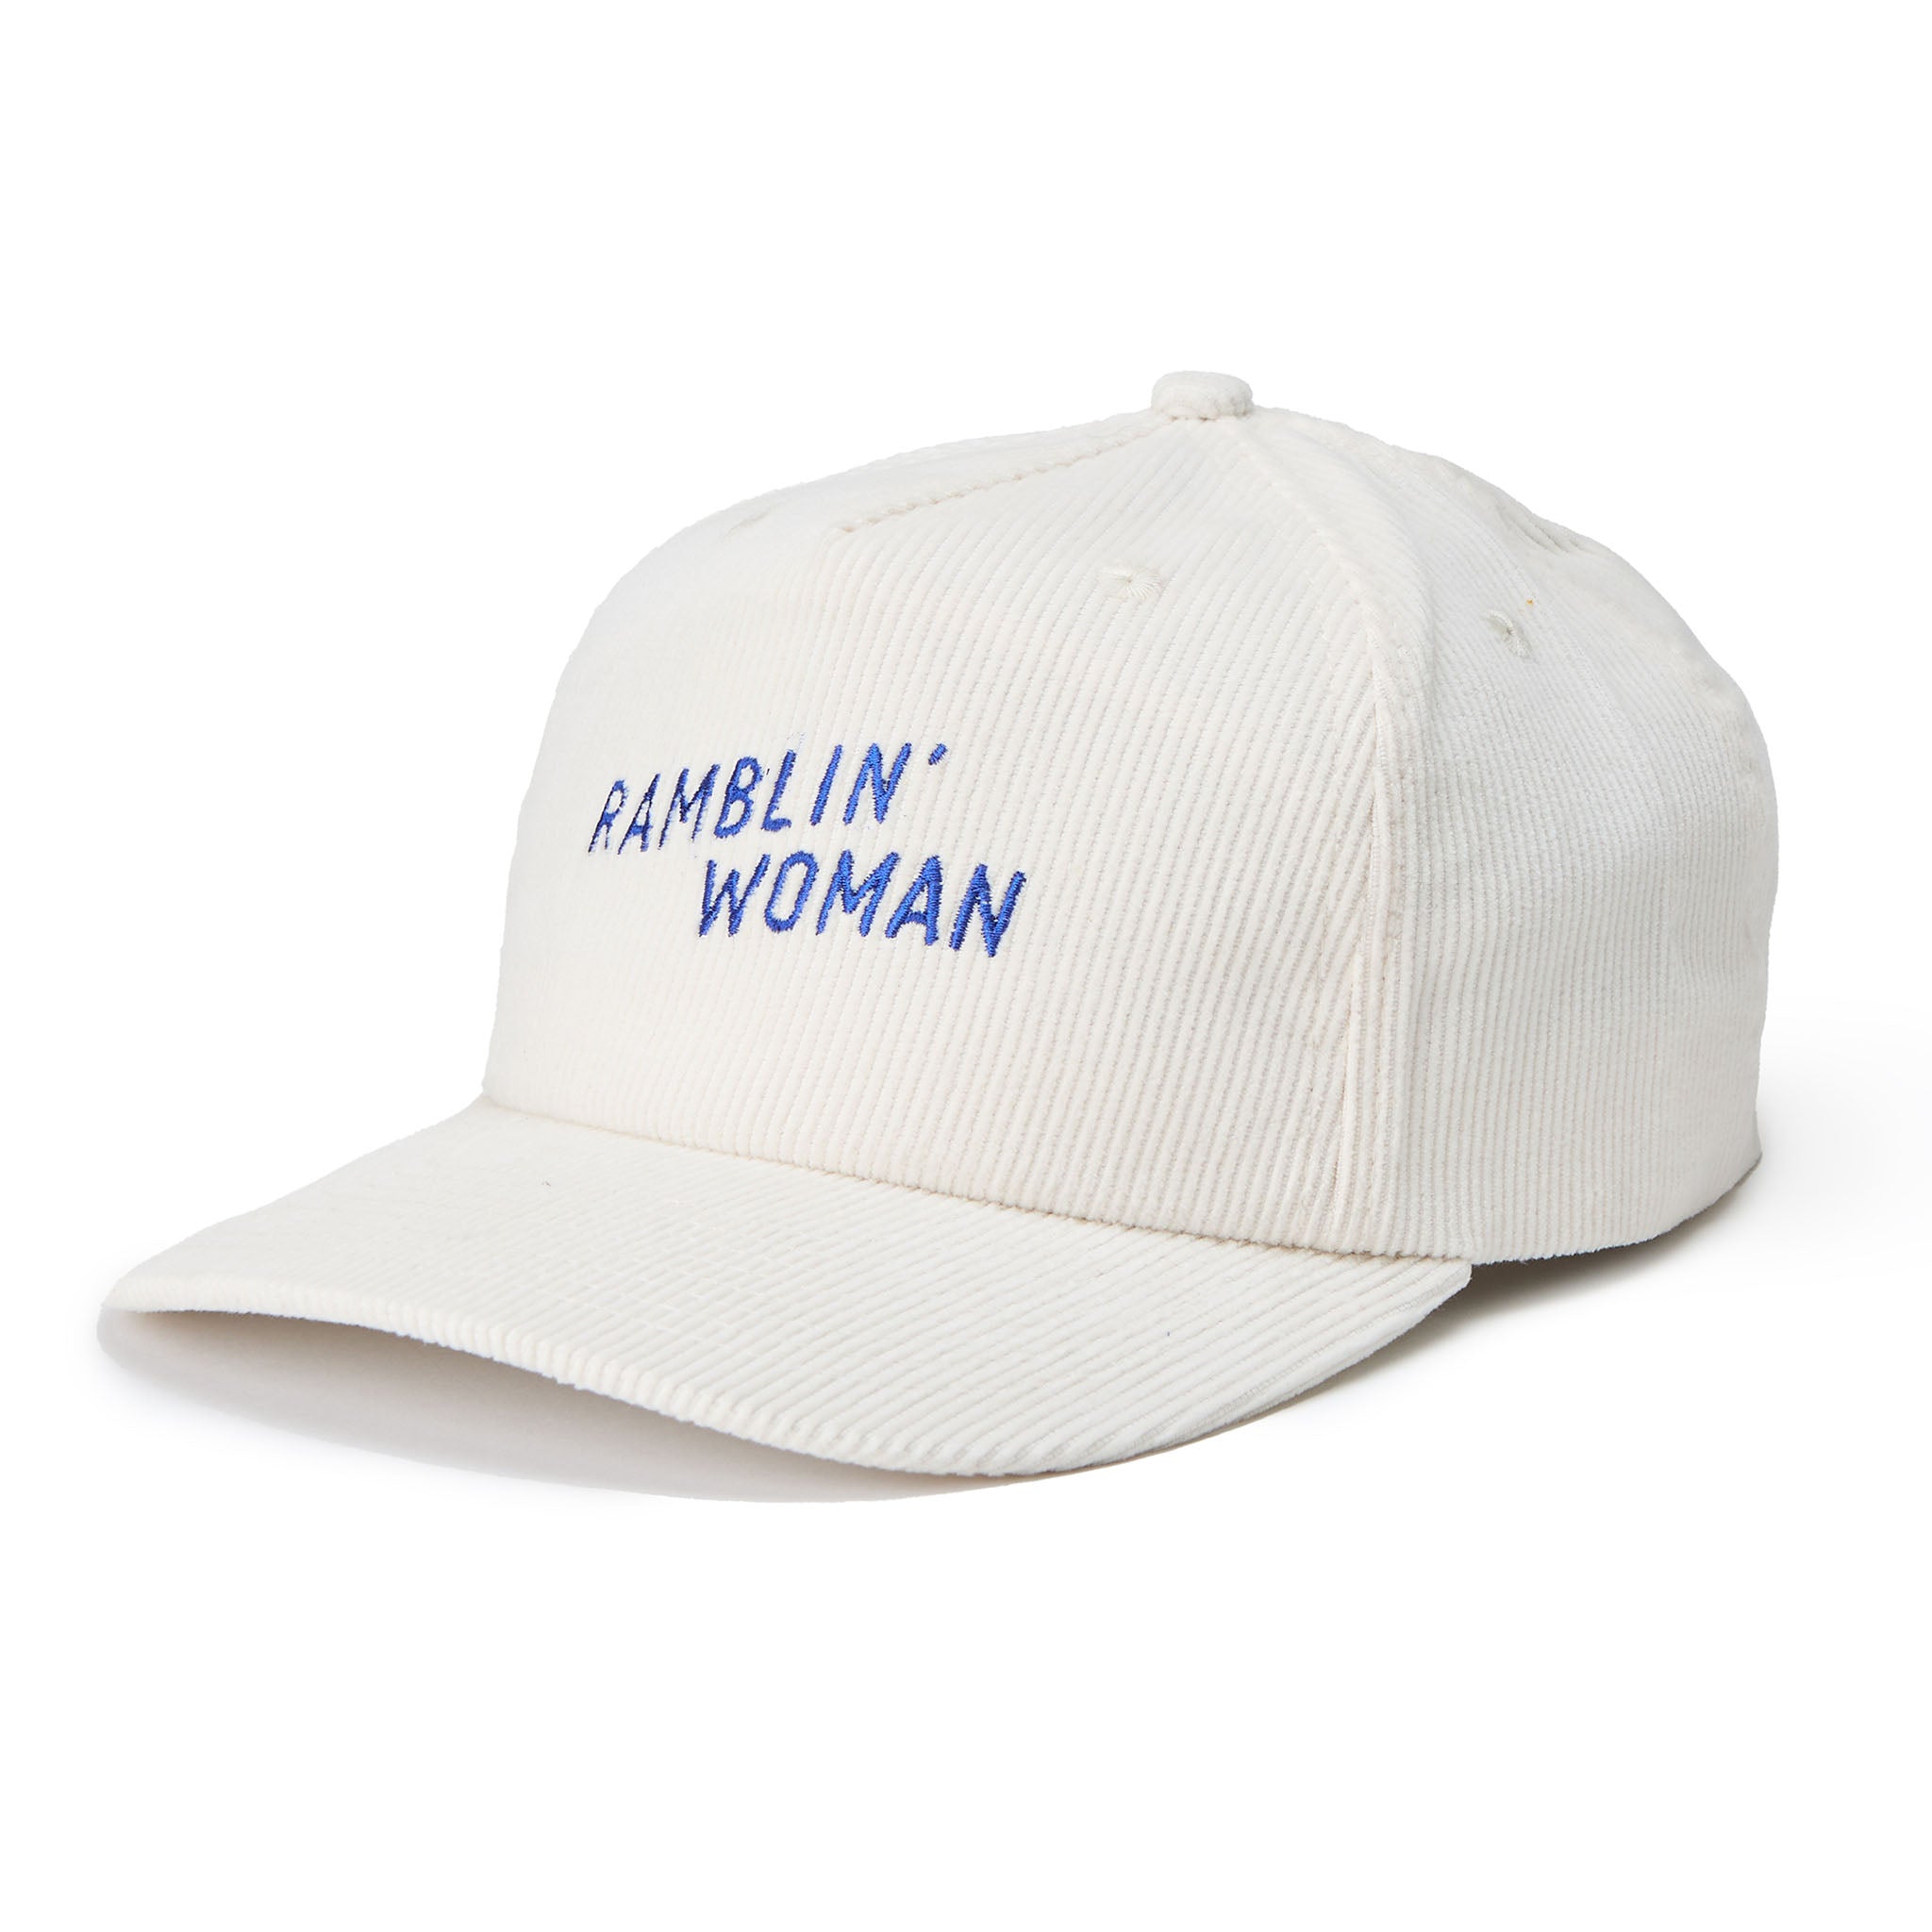 Ramblin' Woman Corduroy Snapback Cream/Blue